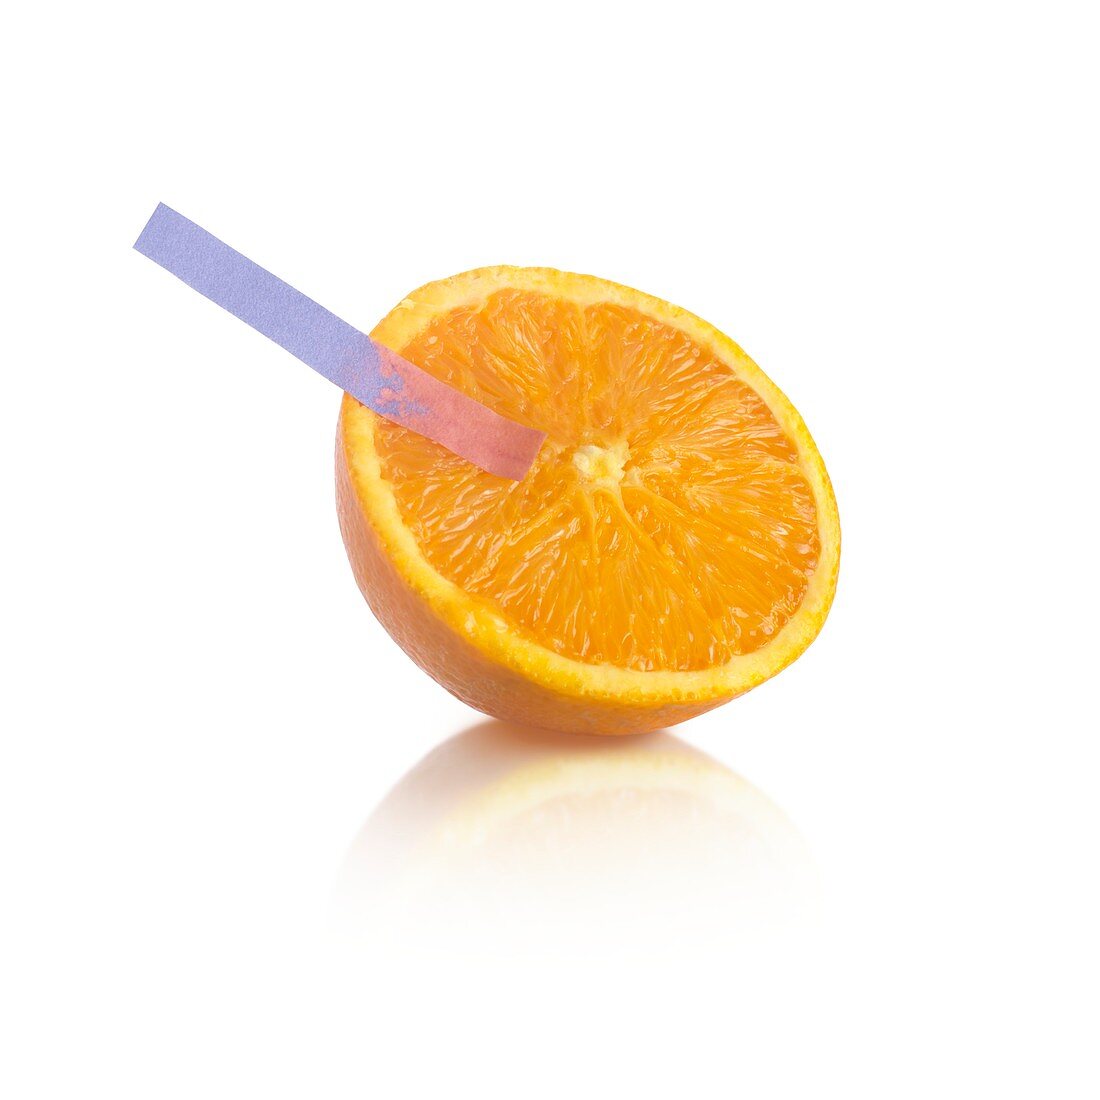 Litmus paper test on an orange